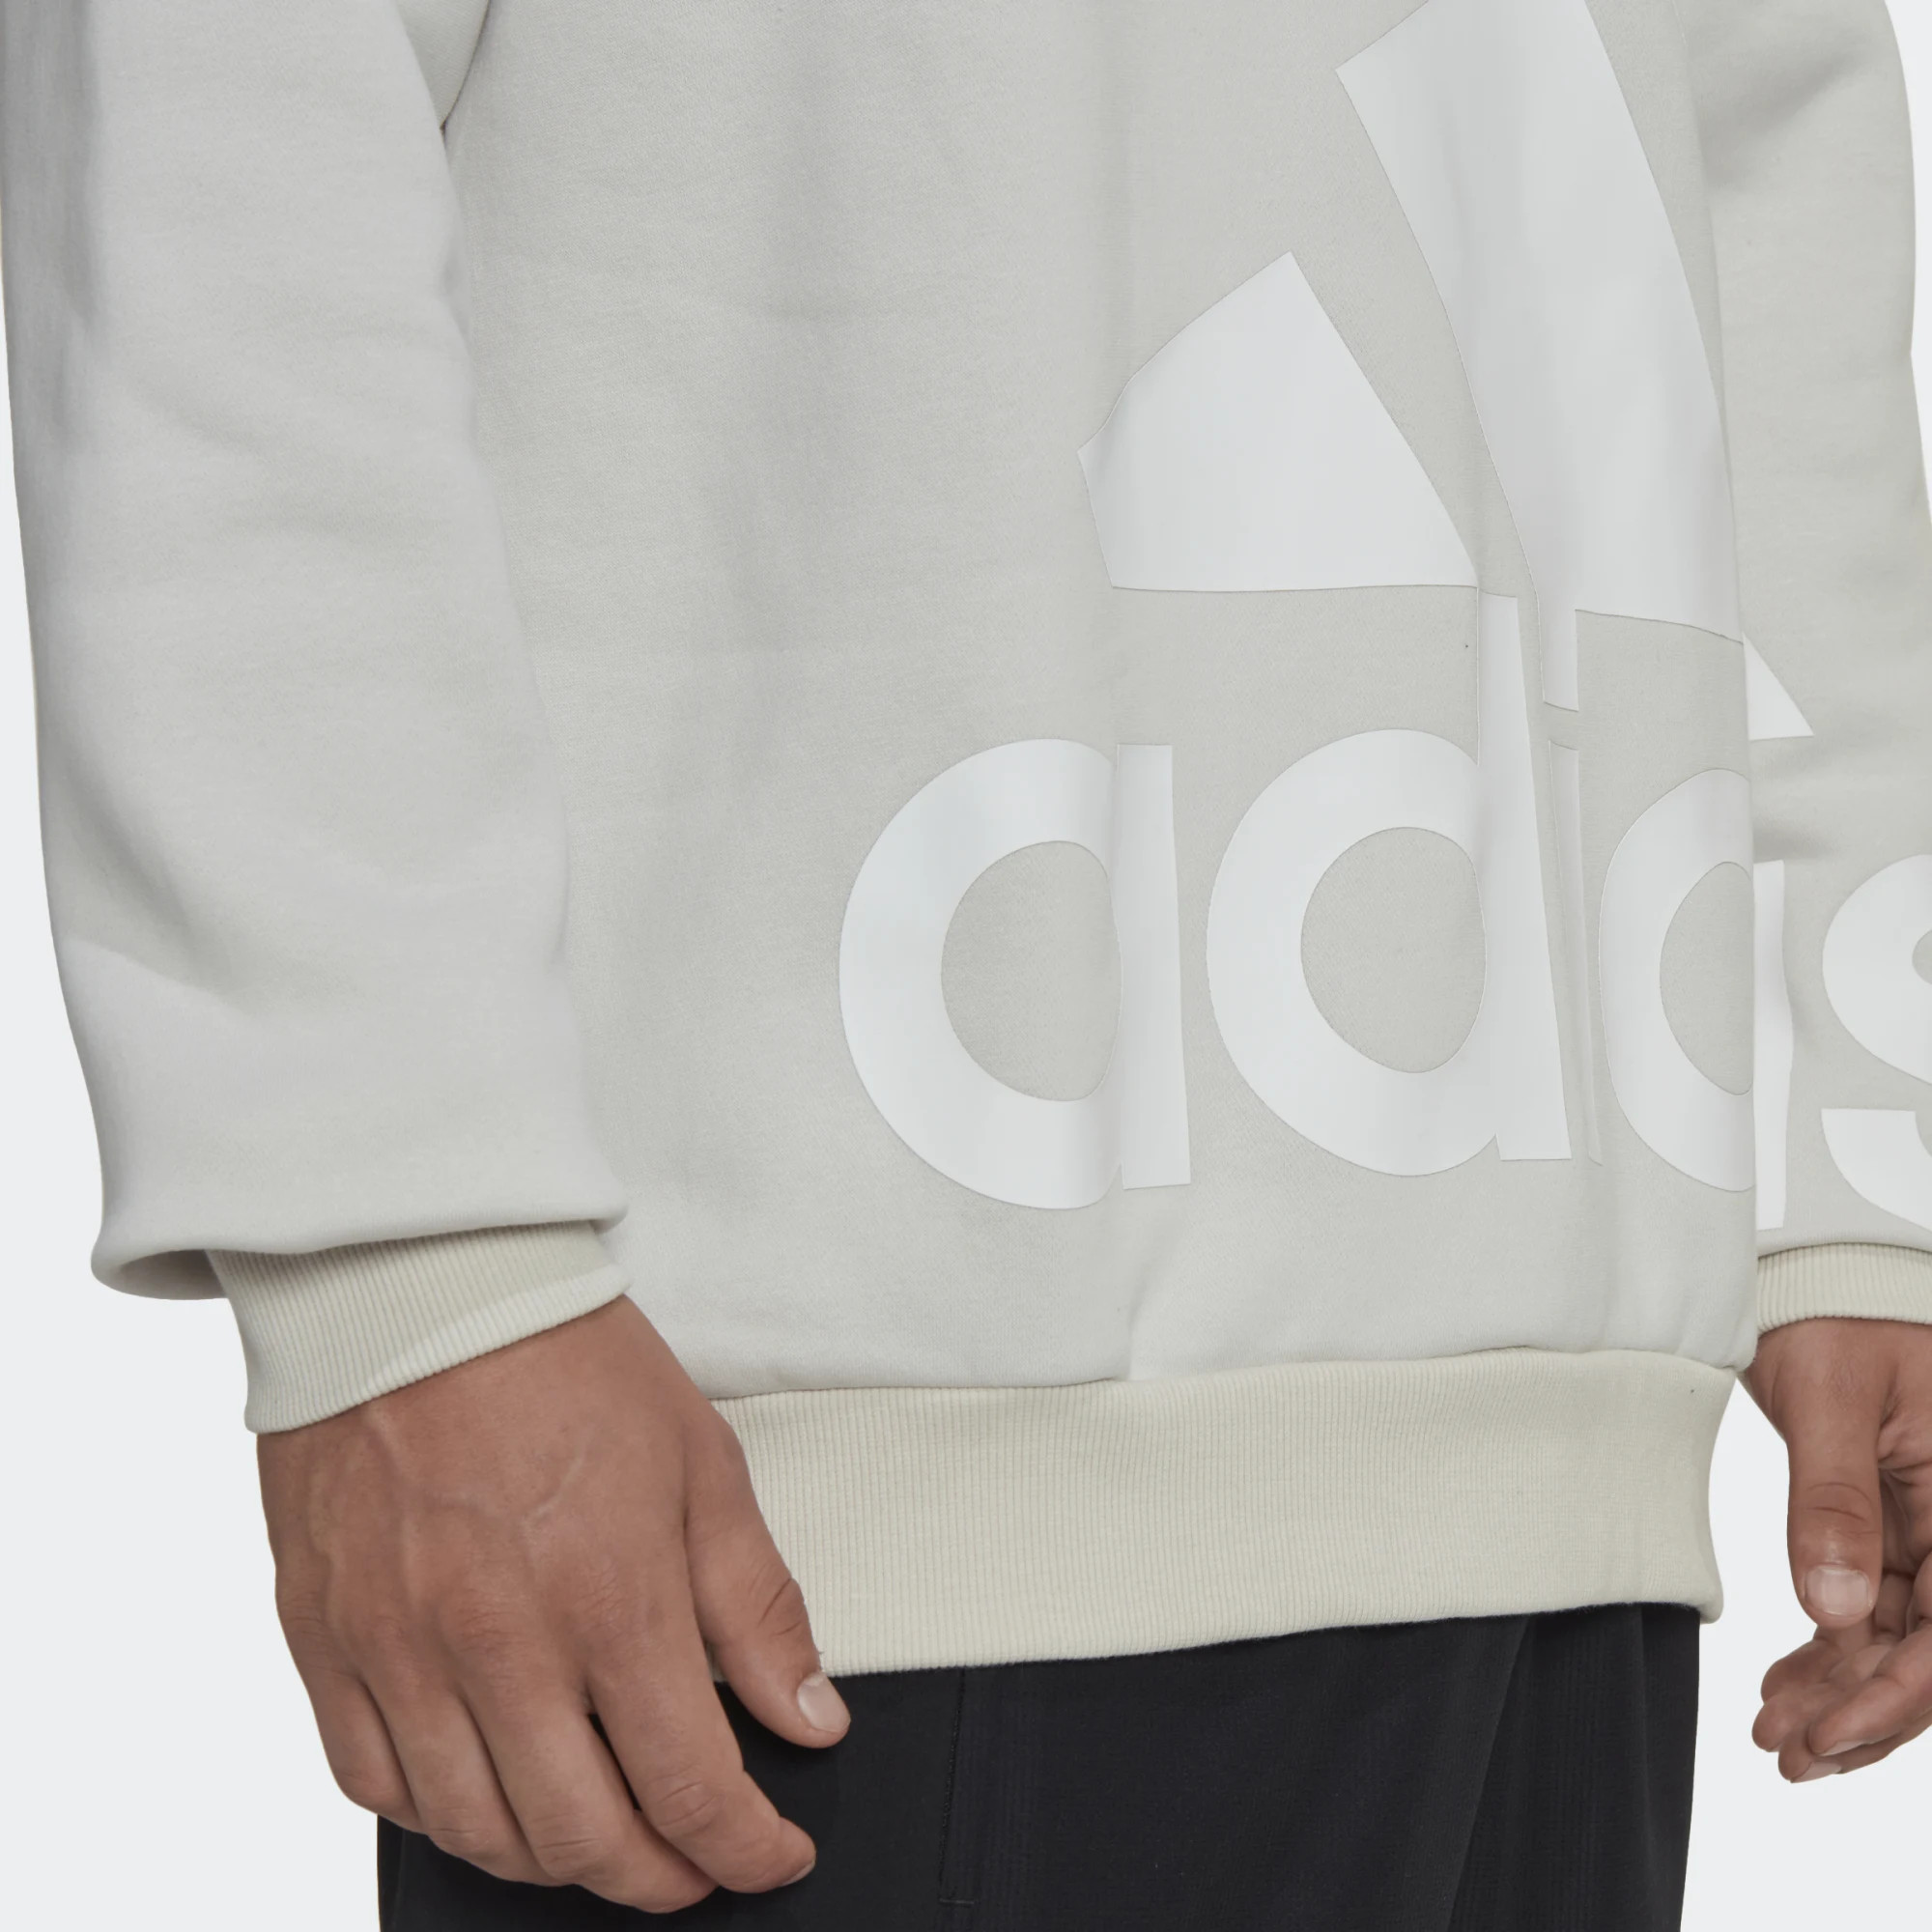 Adidas Essentials Giant Logo Fleece Hoodie